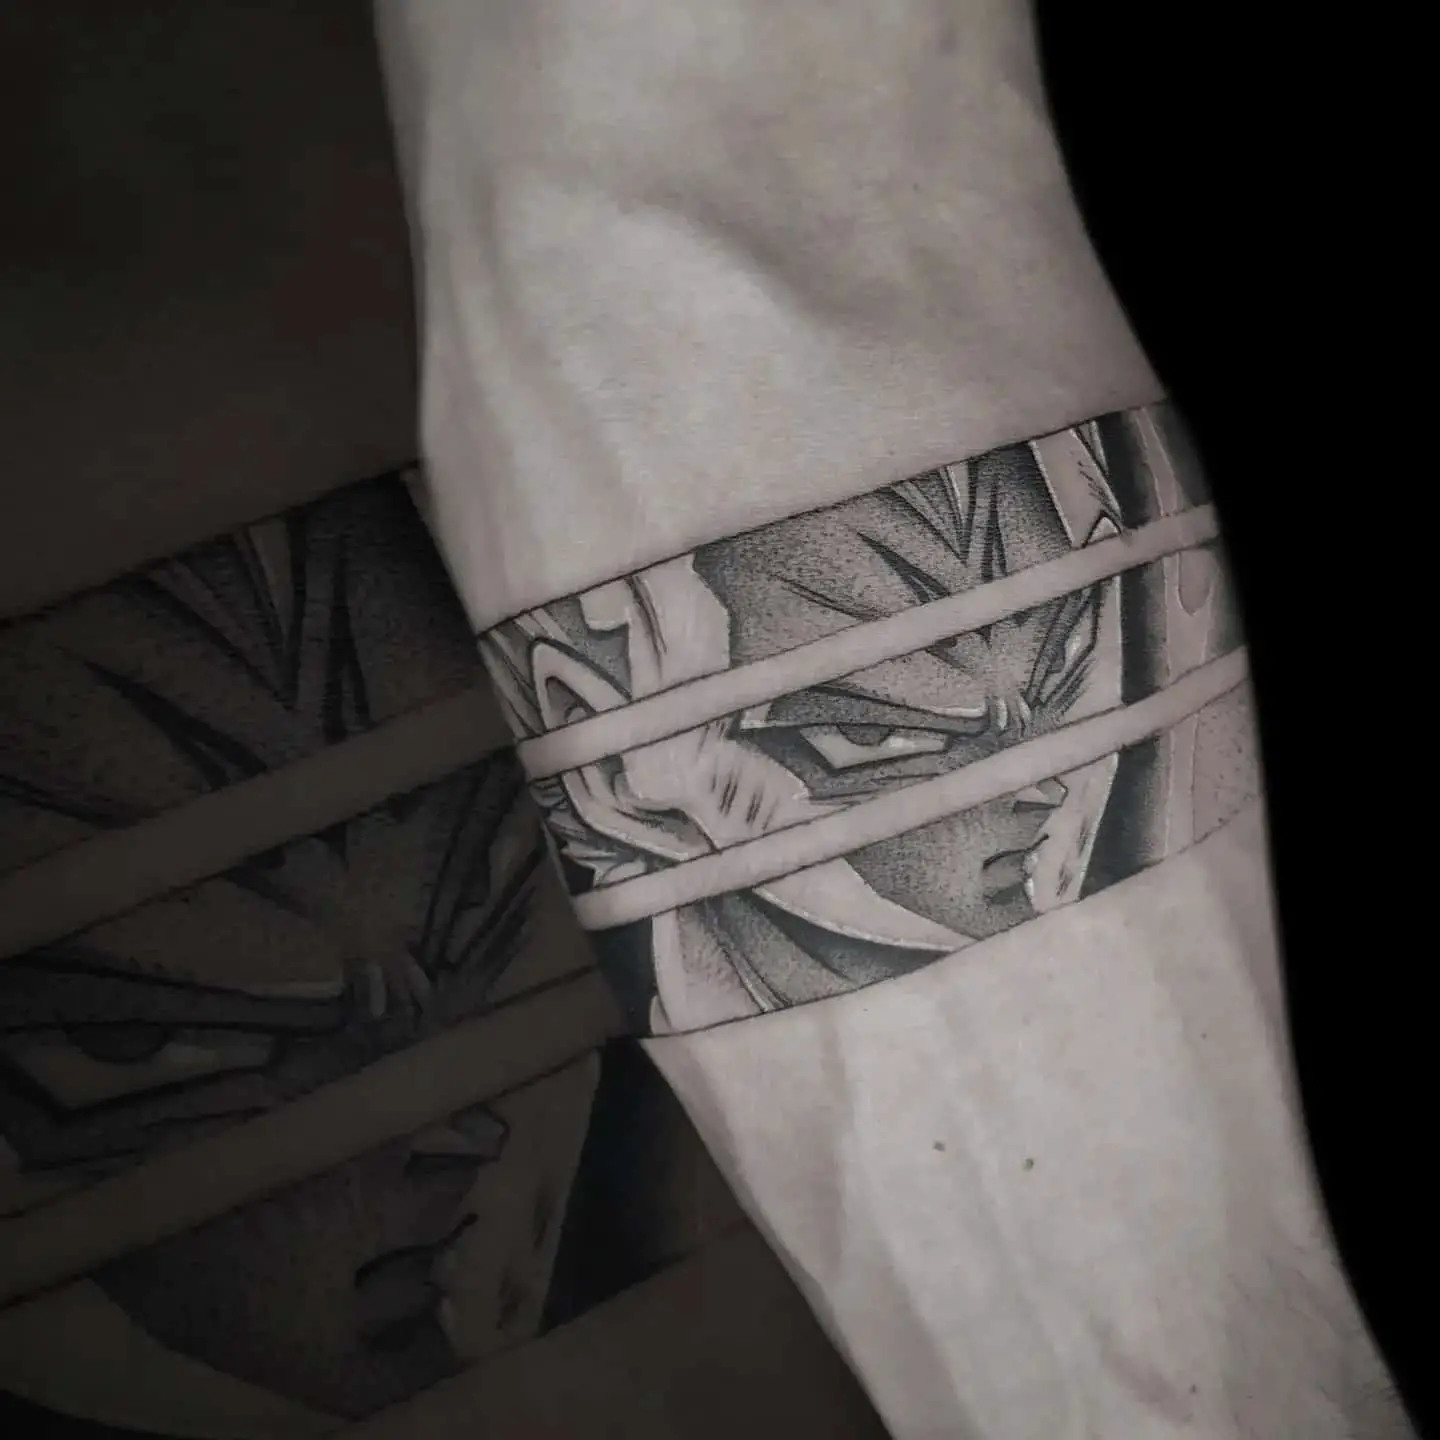 Dragon ball character tattoo on arm by szymon olech tattoo